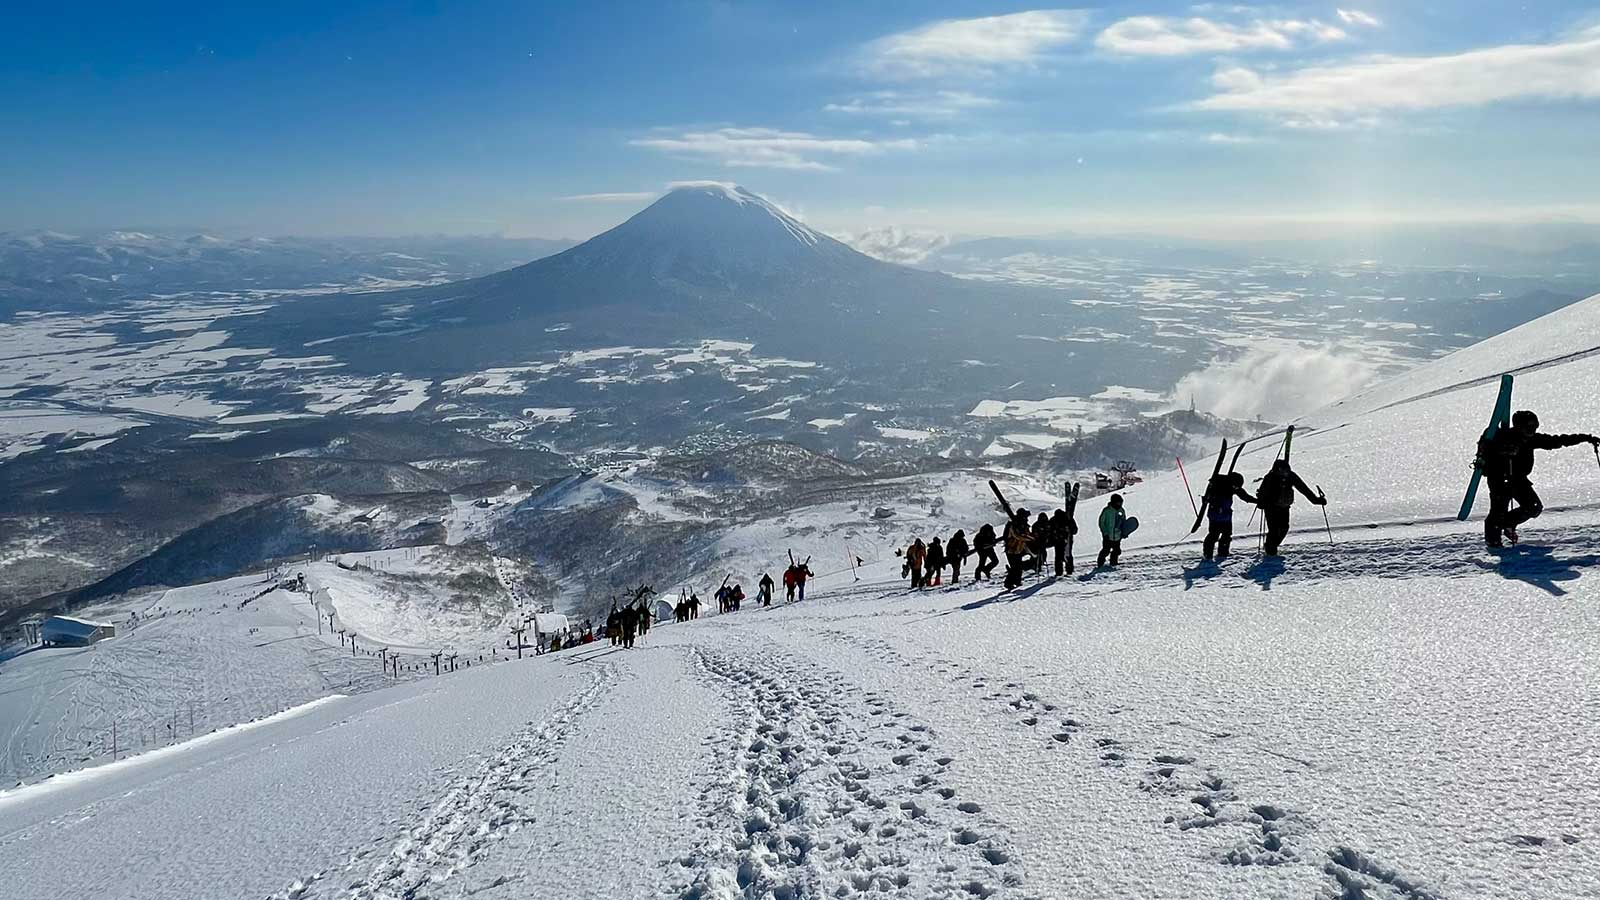 Niseko ski resort with view of Mount Yotei, Japan